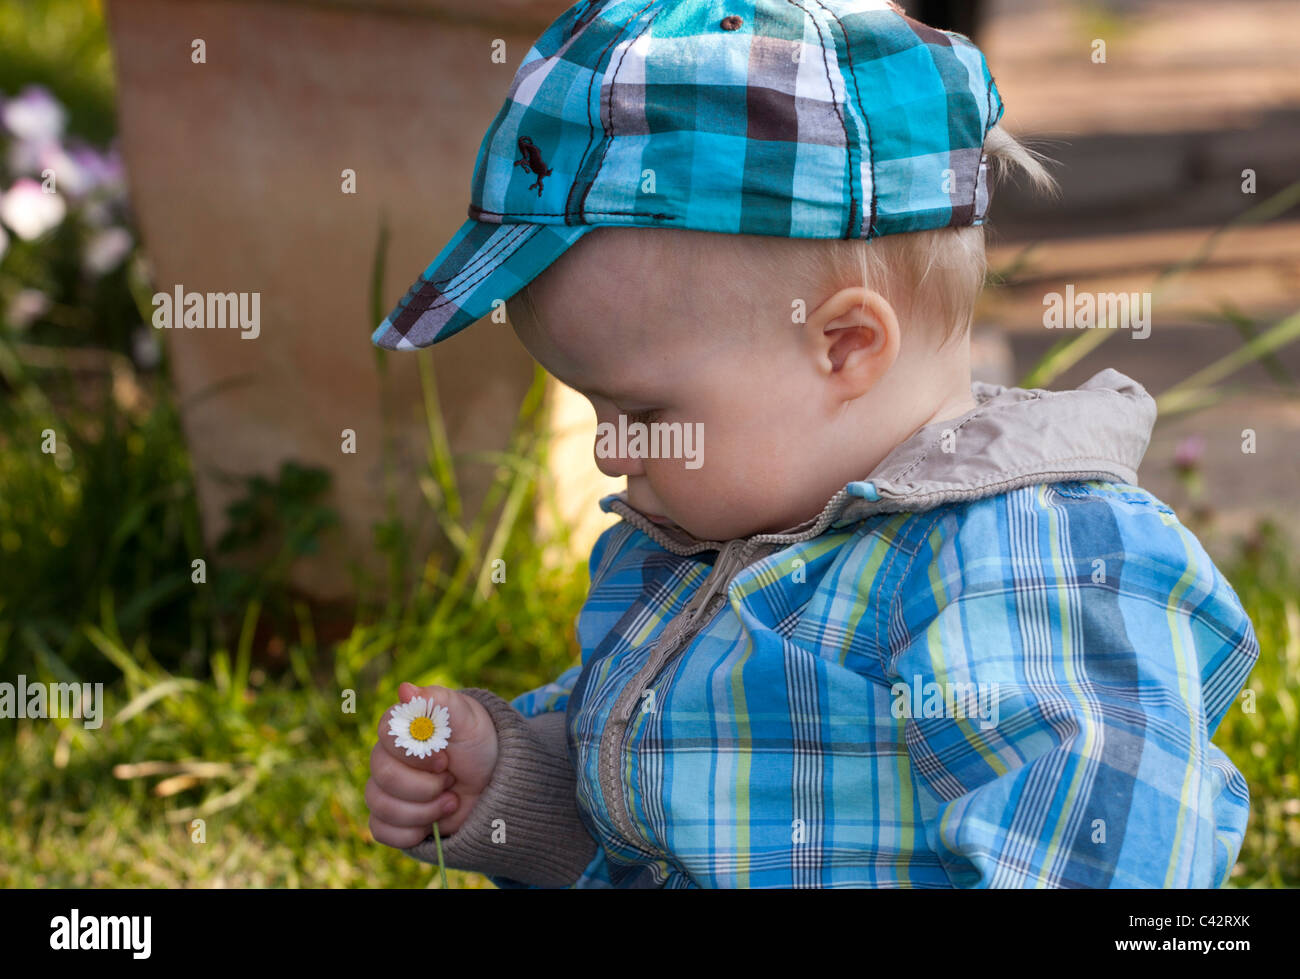 Baby boy holding small daisy flower. Stock Photo